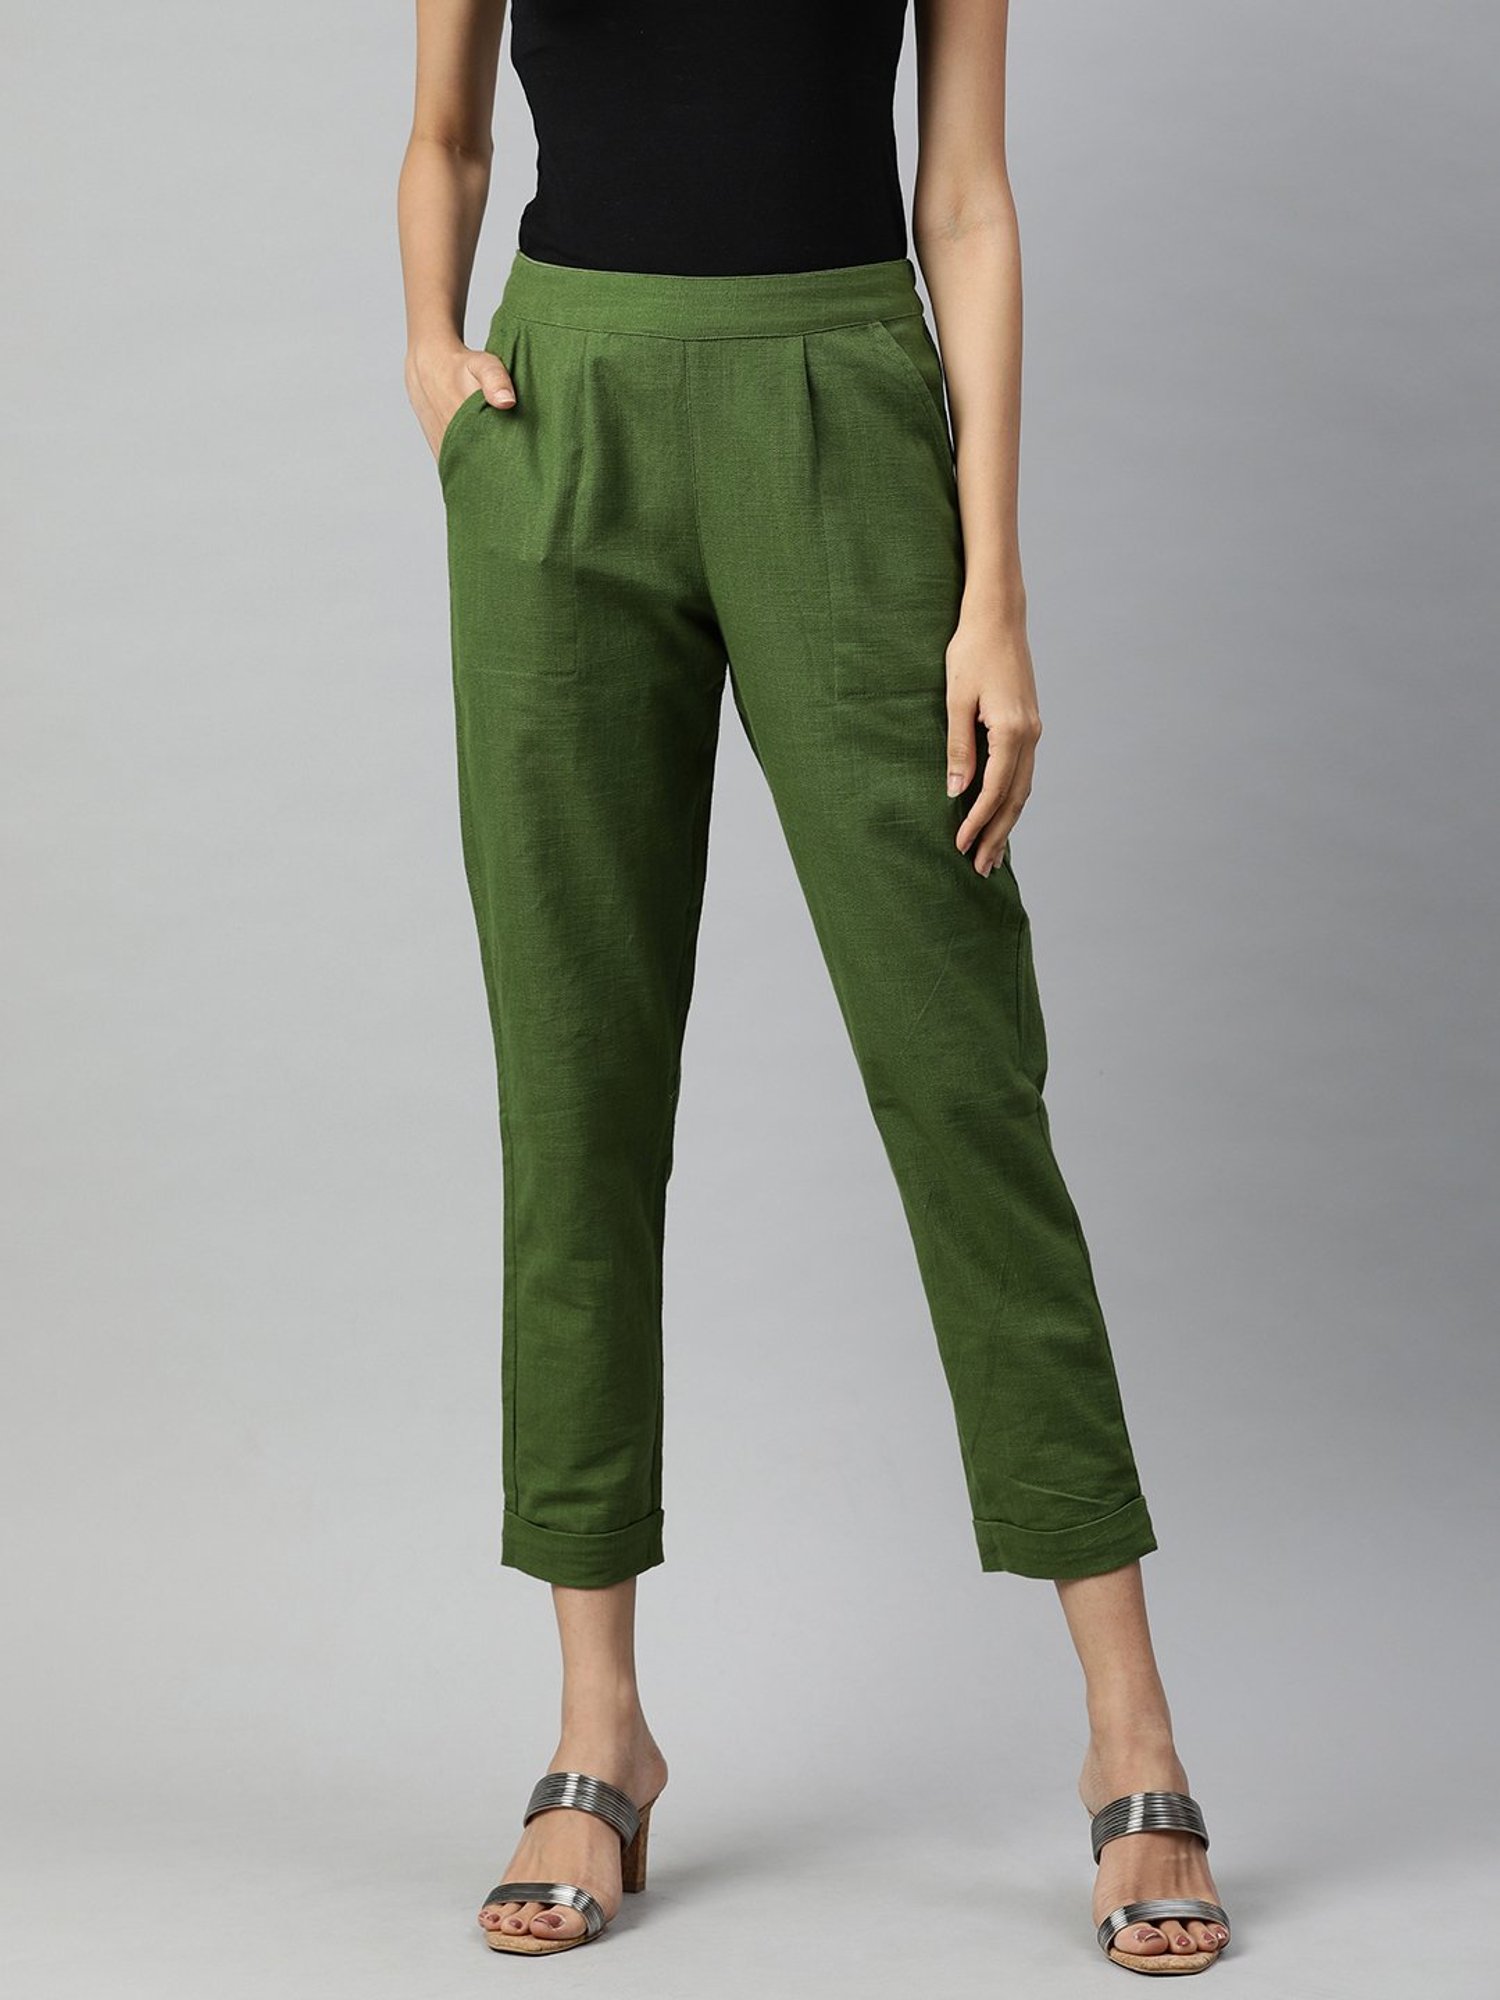 Buy Lycra Pants Womens & Lycra Fabric Pants - Apella